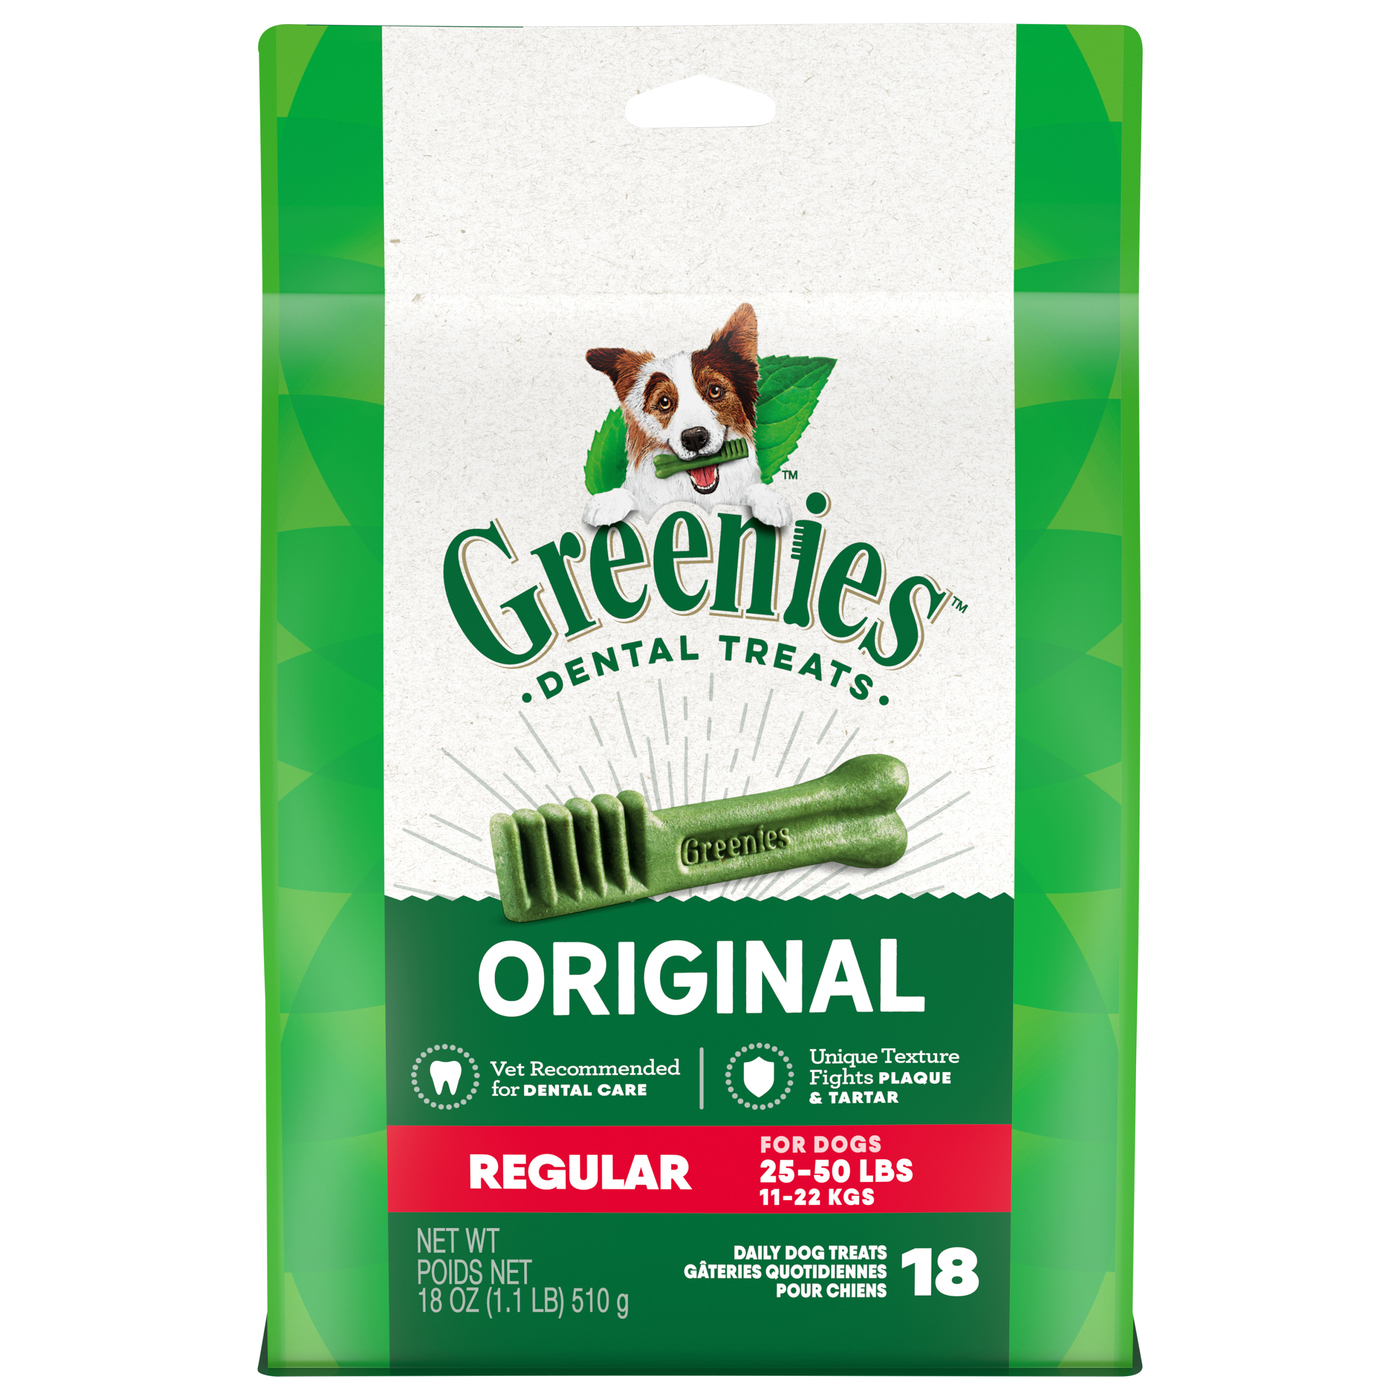 Greenies Original Regular Dog Treats 18 oz. Bag